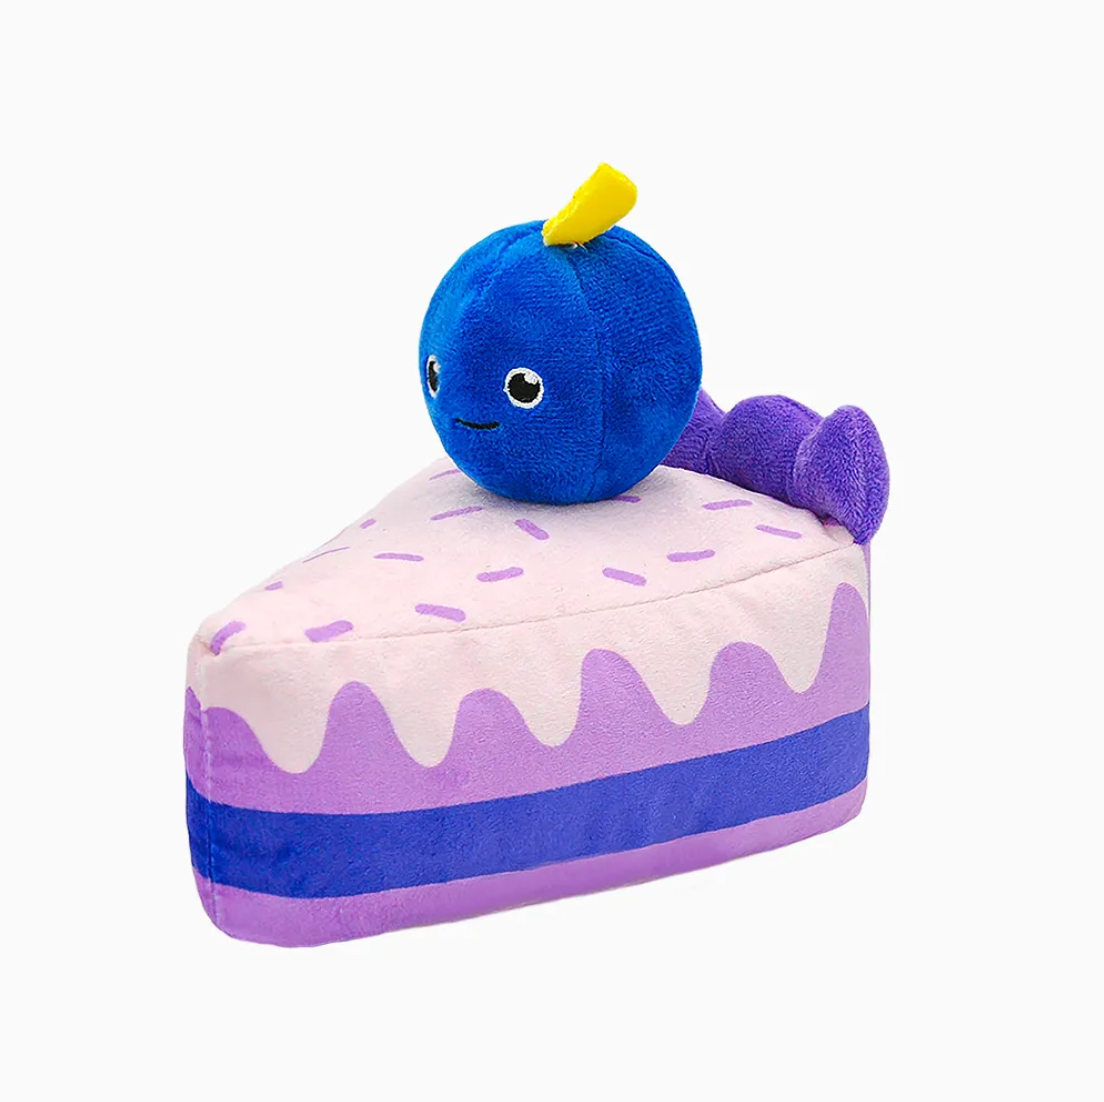 HugSmart Fuzzy Friendz Pooch Sweets - Blueberry Cake Dog Toy